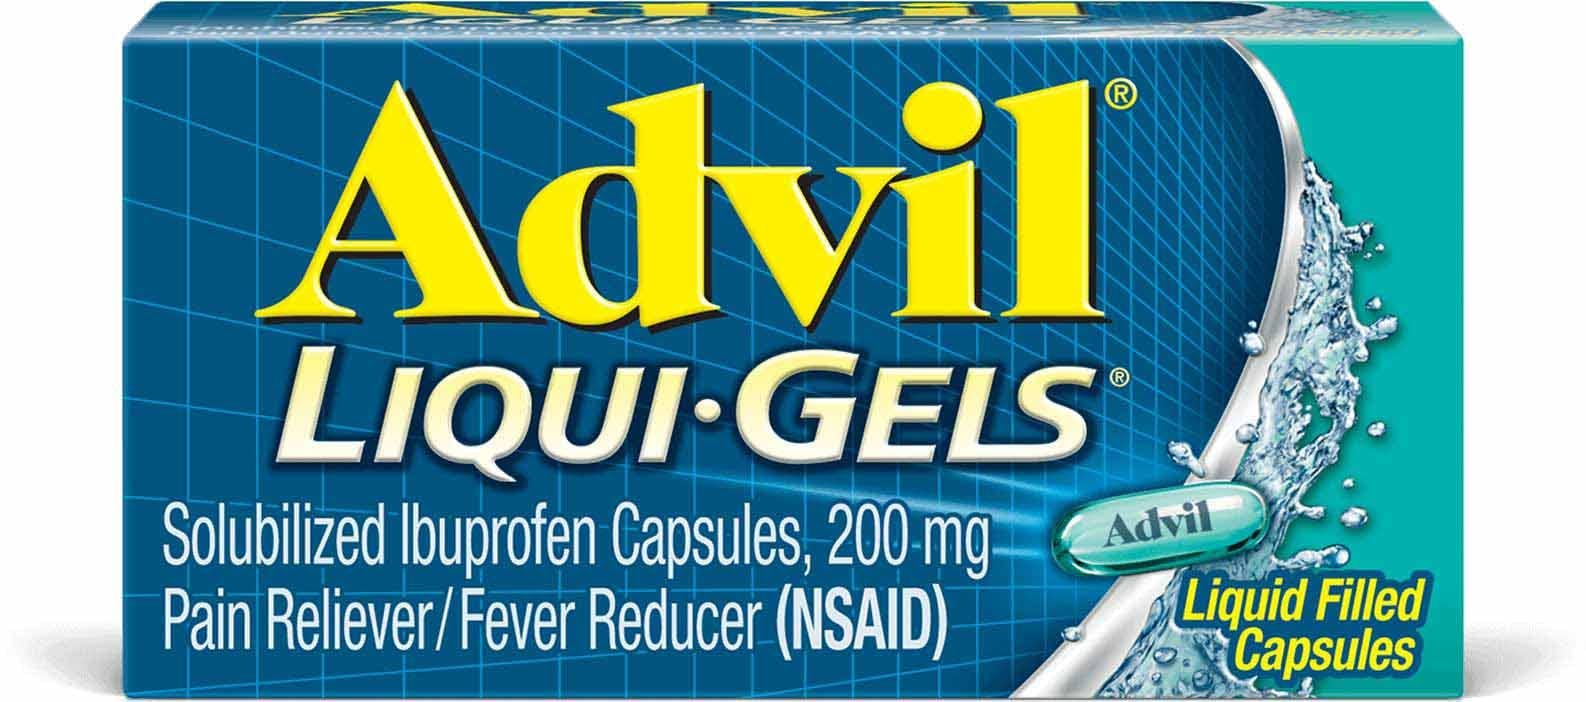 Advil Liqui Gel